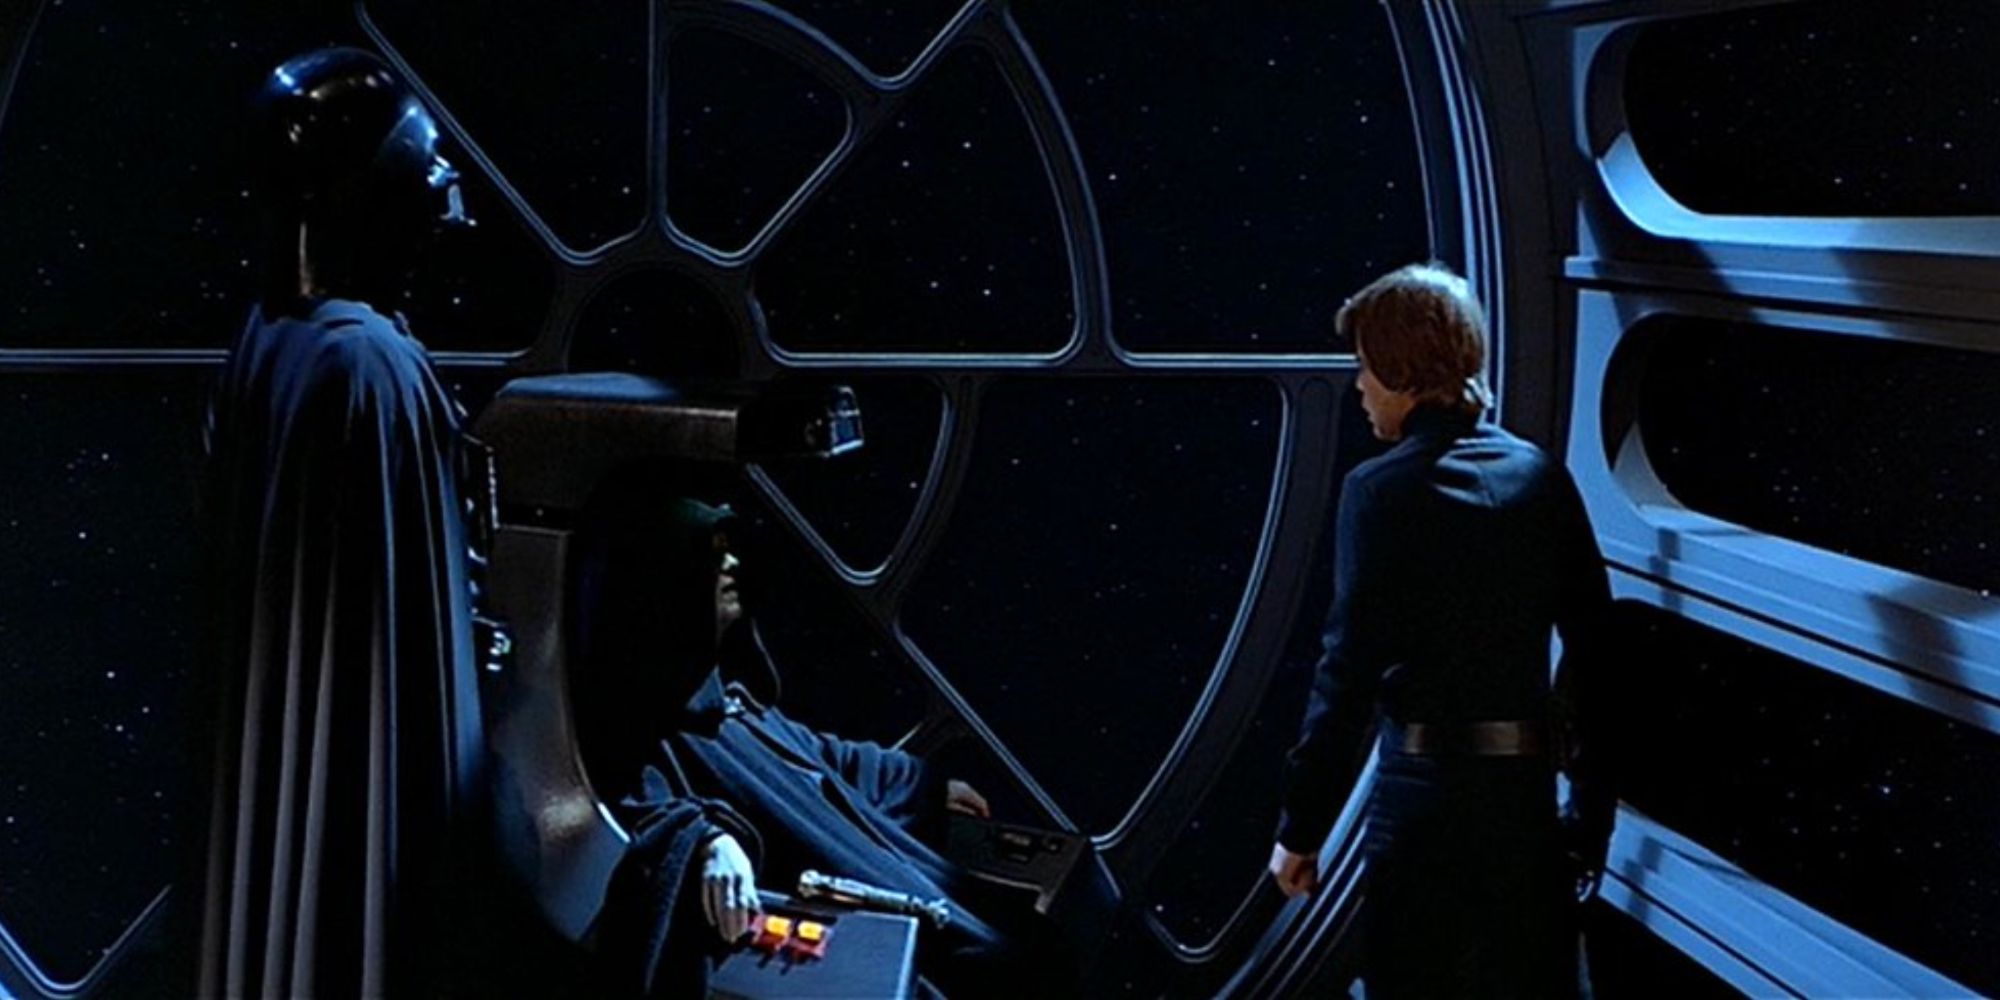 Darth Vader, Emperor Palpatine, and Luke Skywalker in the Death Star throne room